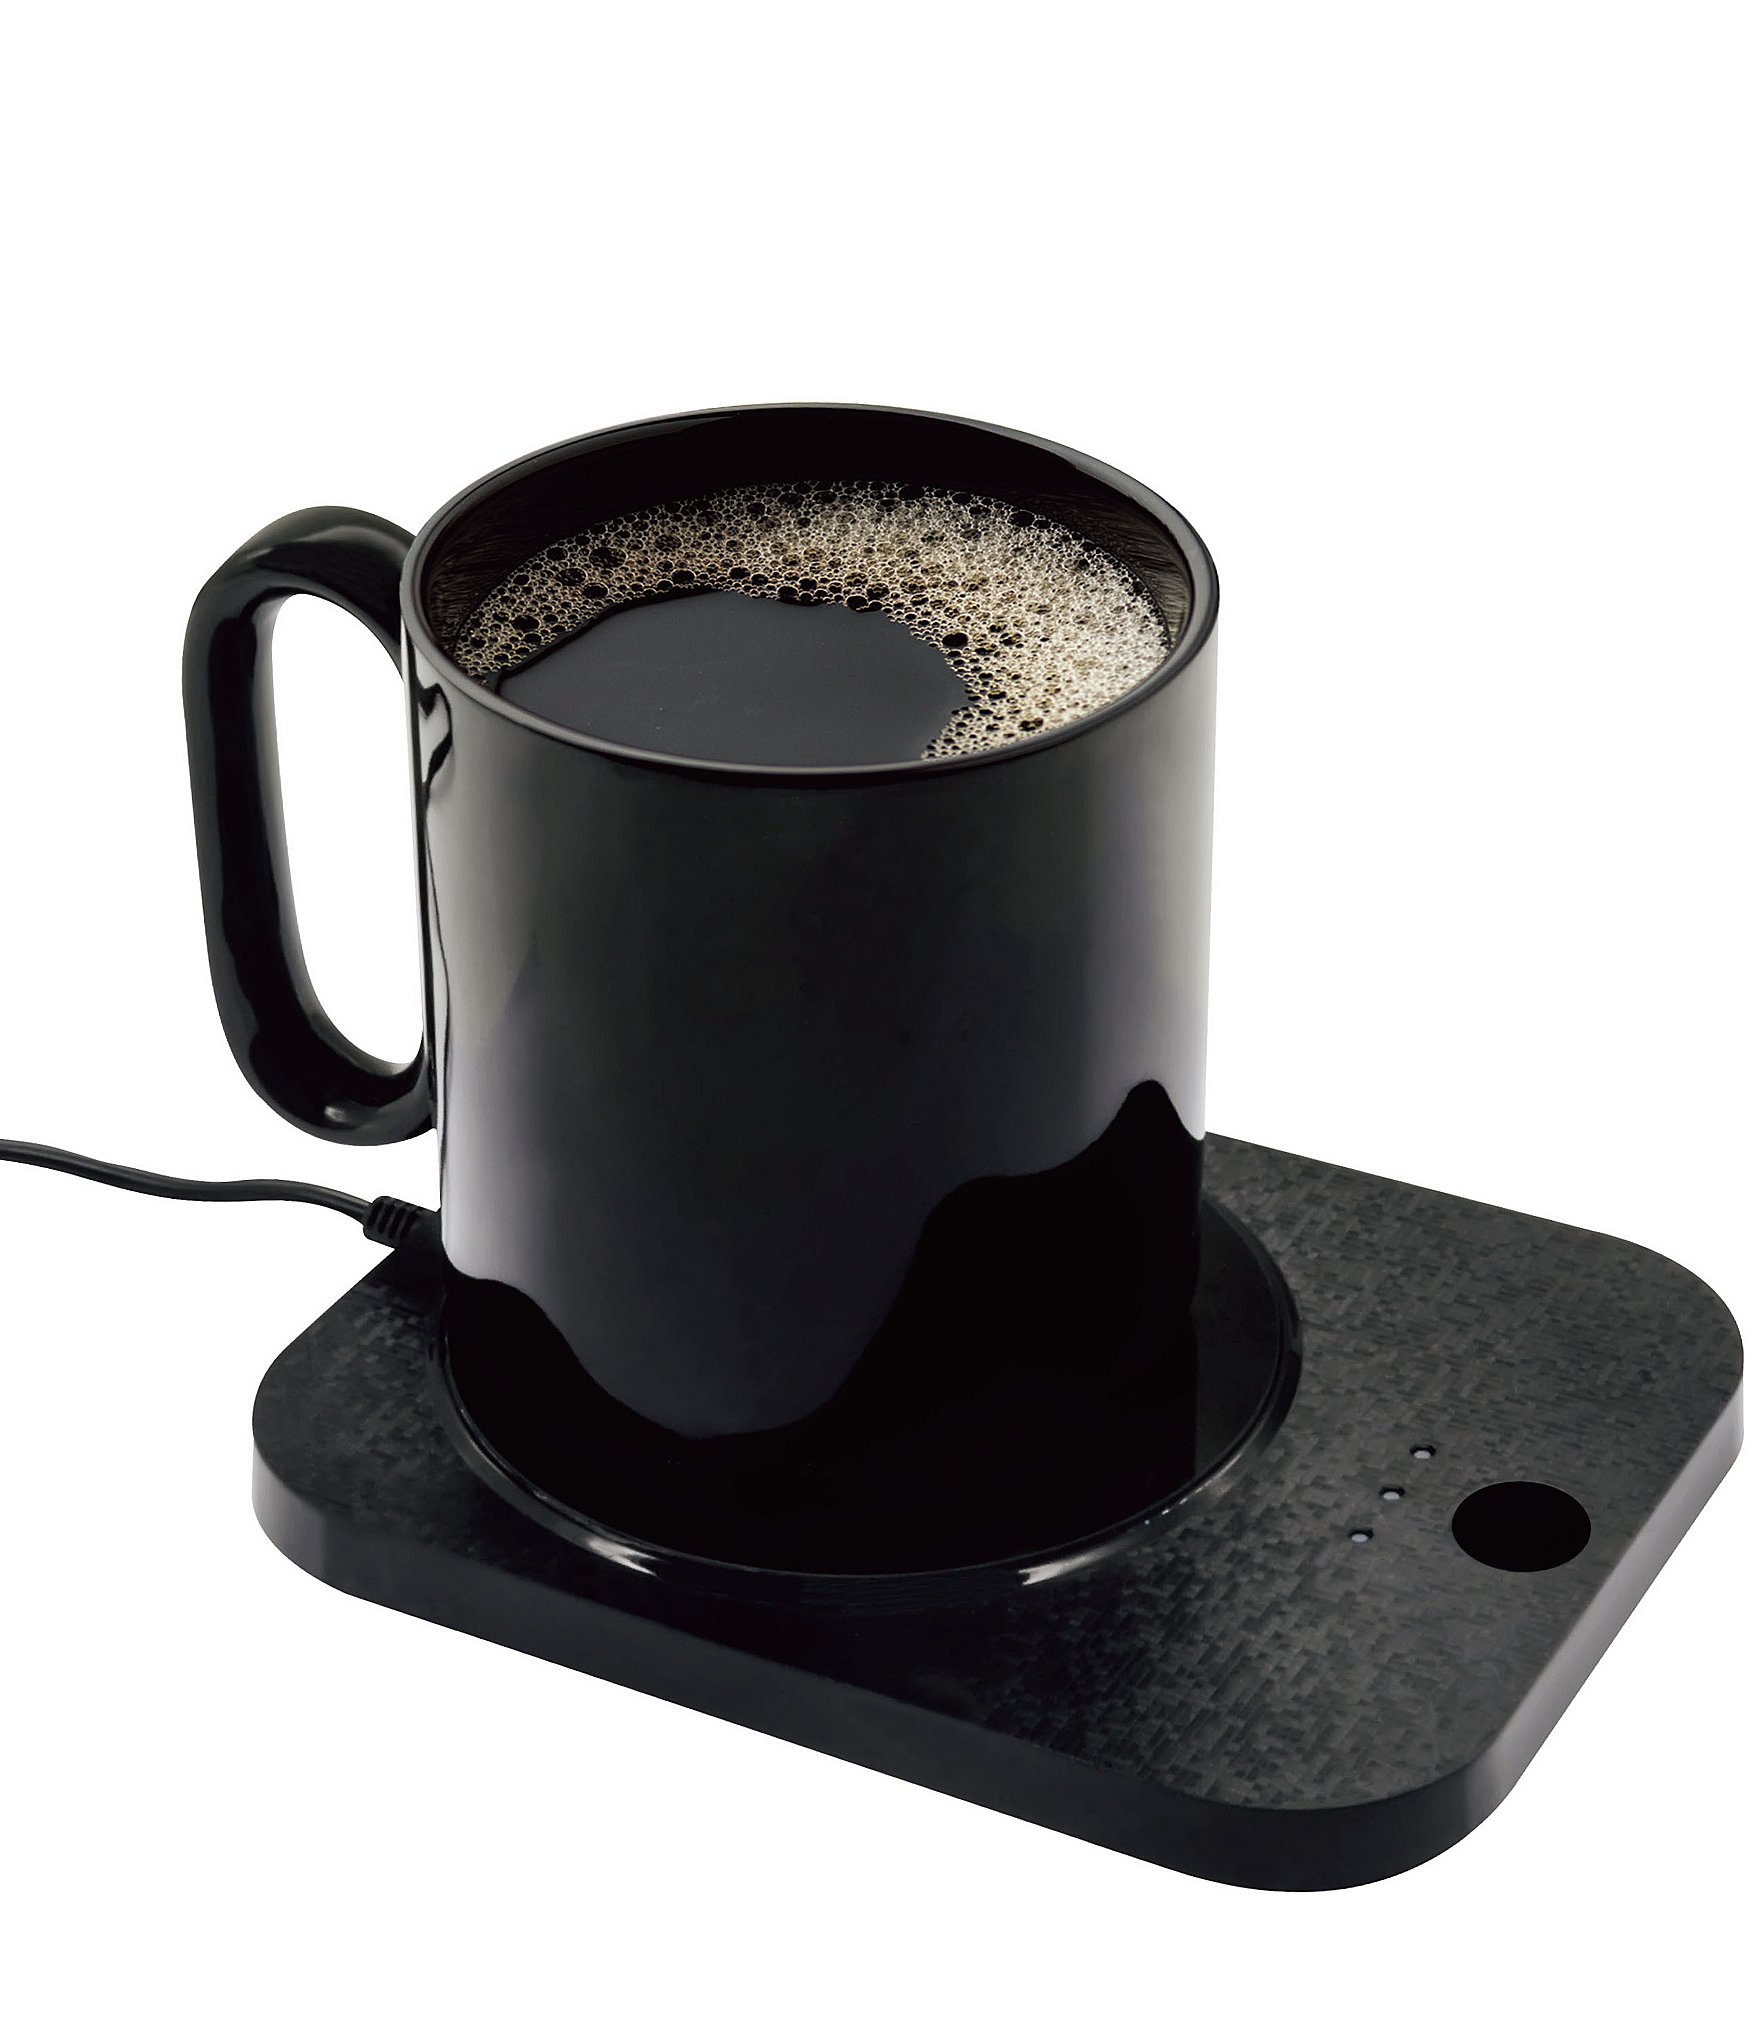  HYRIXDIRECT Coffee Mug Warmer with Mug Spoon Set